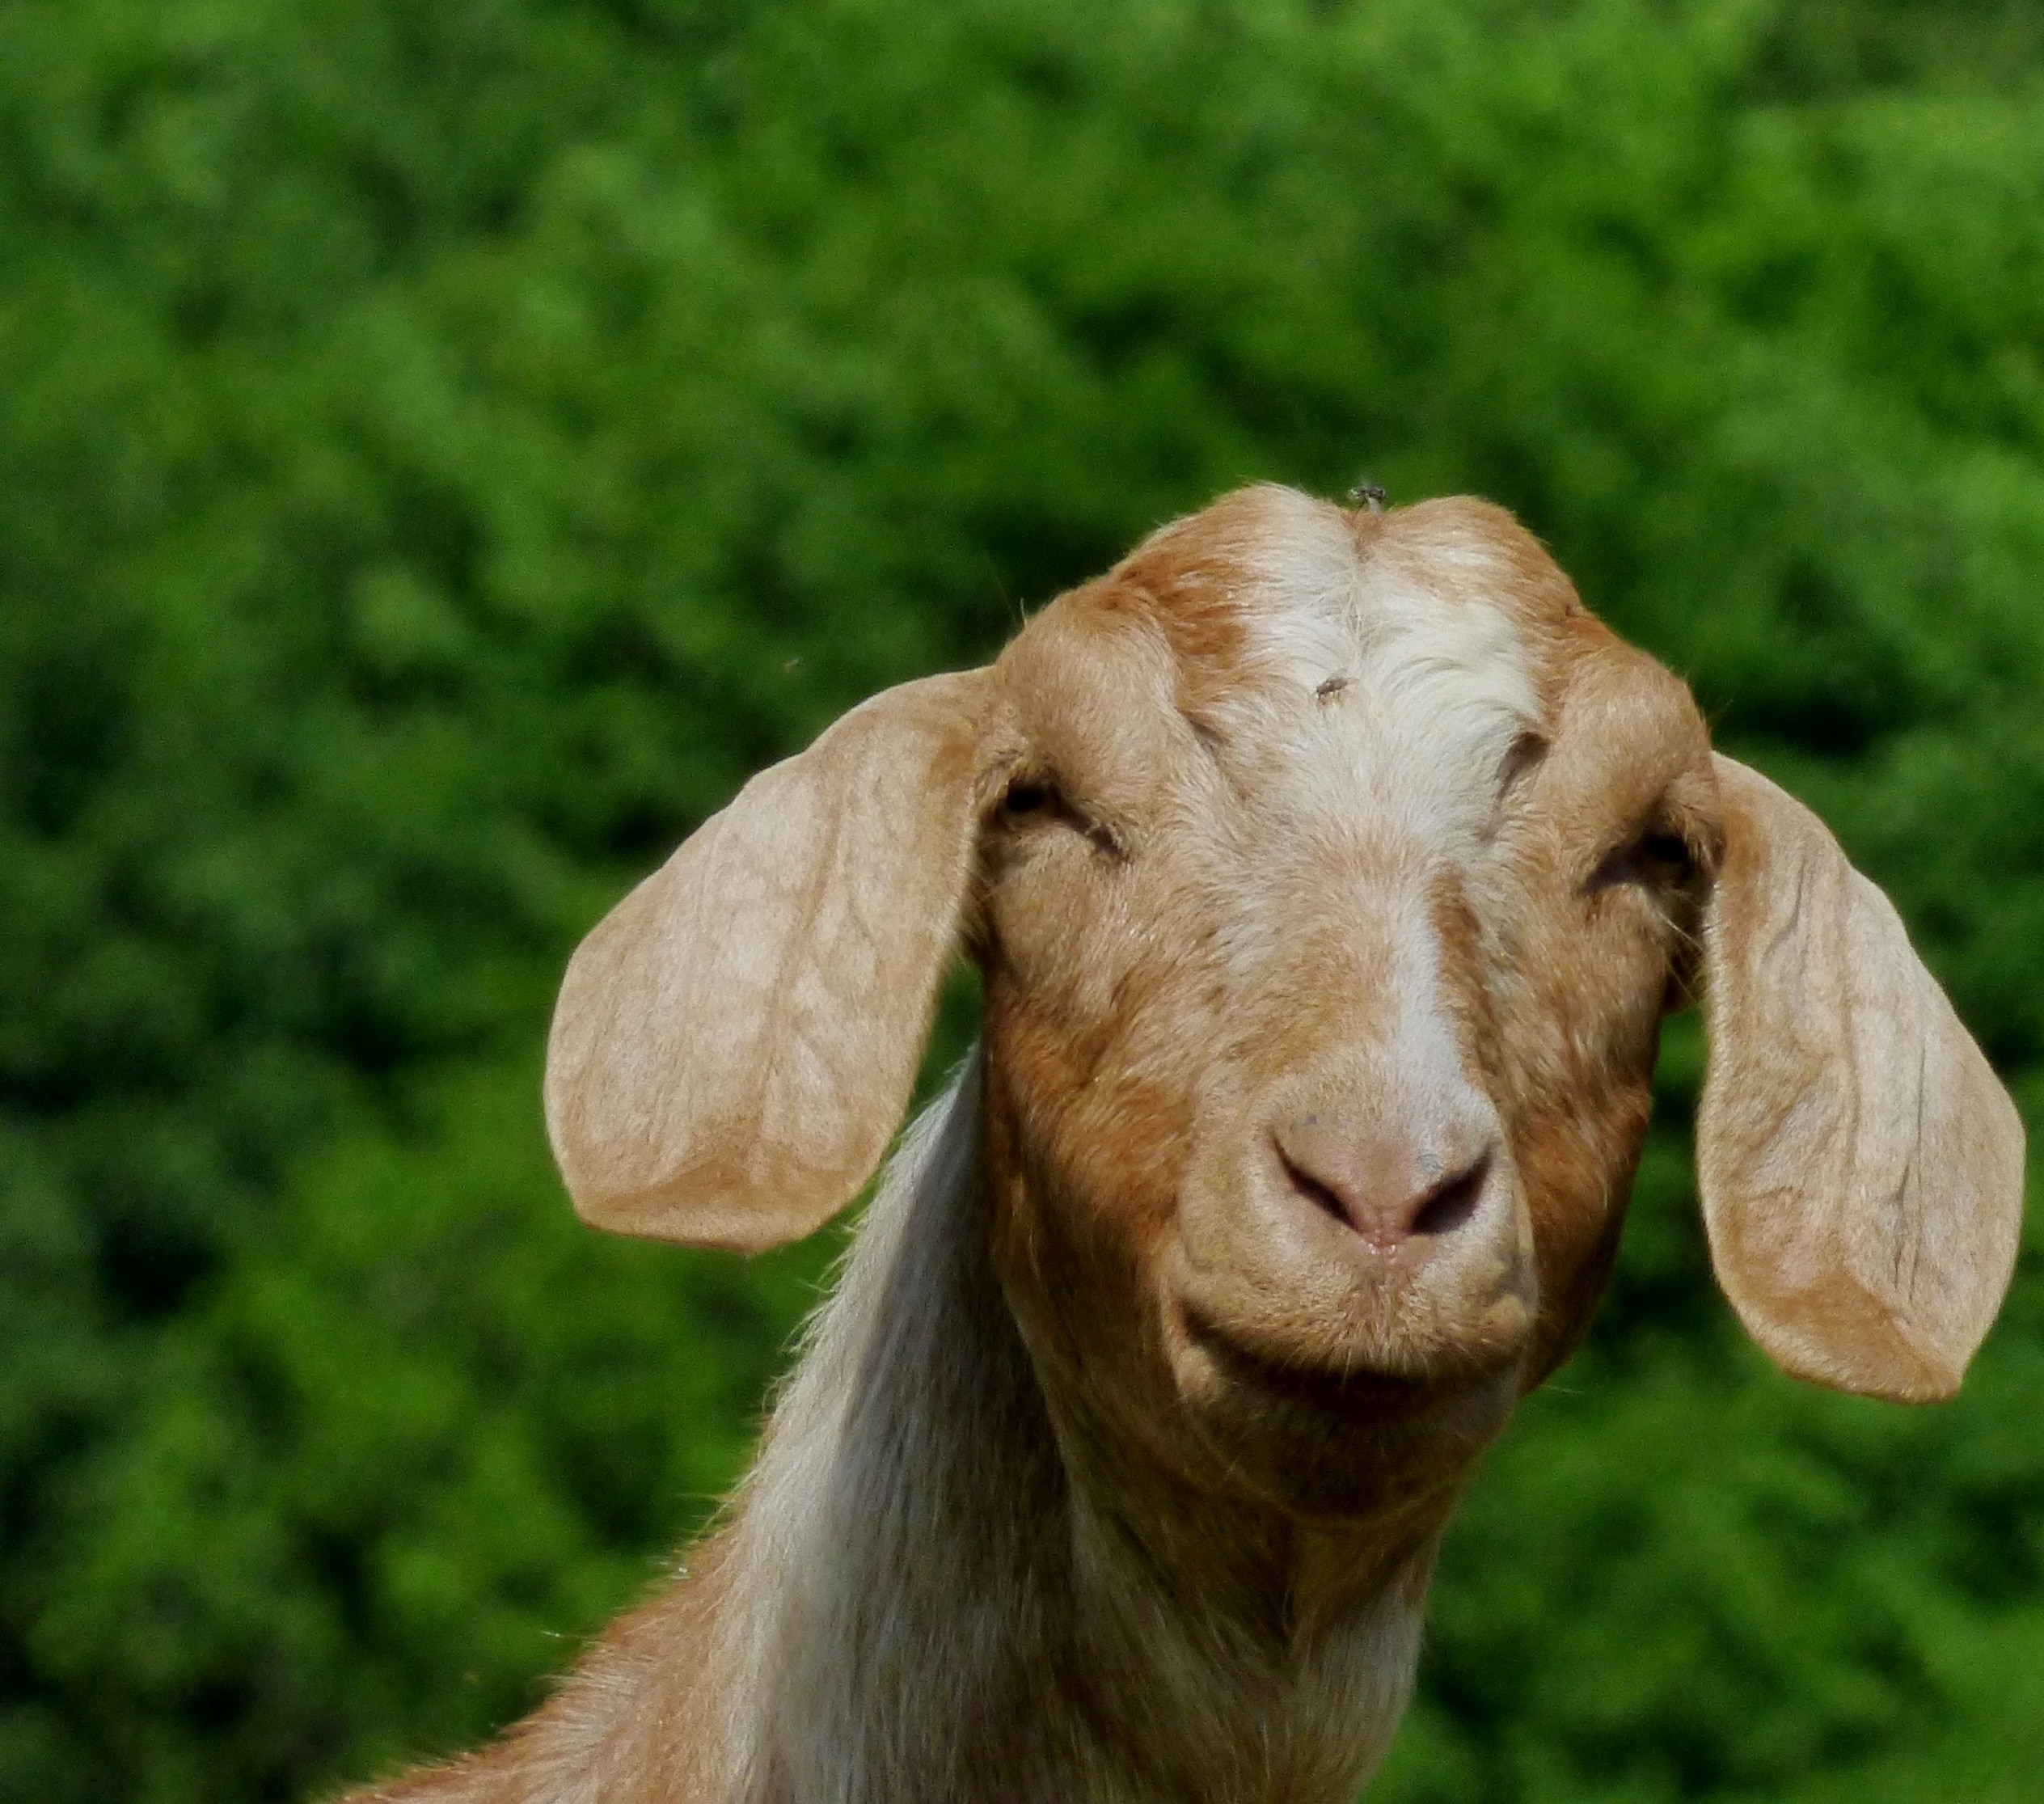 Floppy Ears, Animals, Geitekop, Goat, domestic animals, livestock